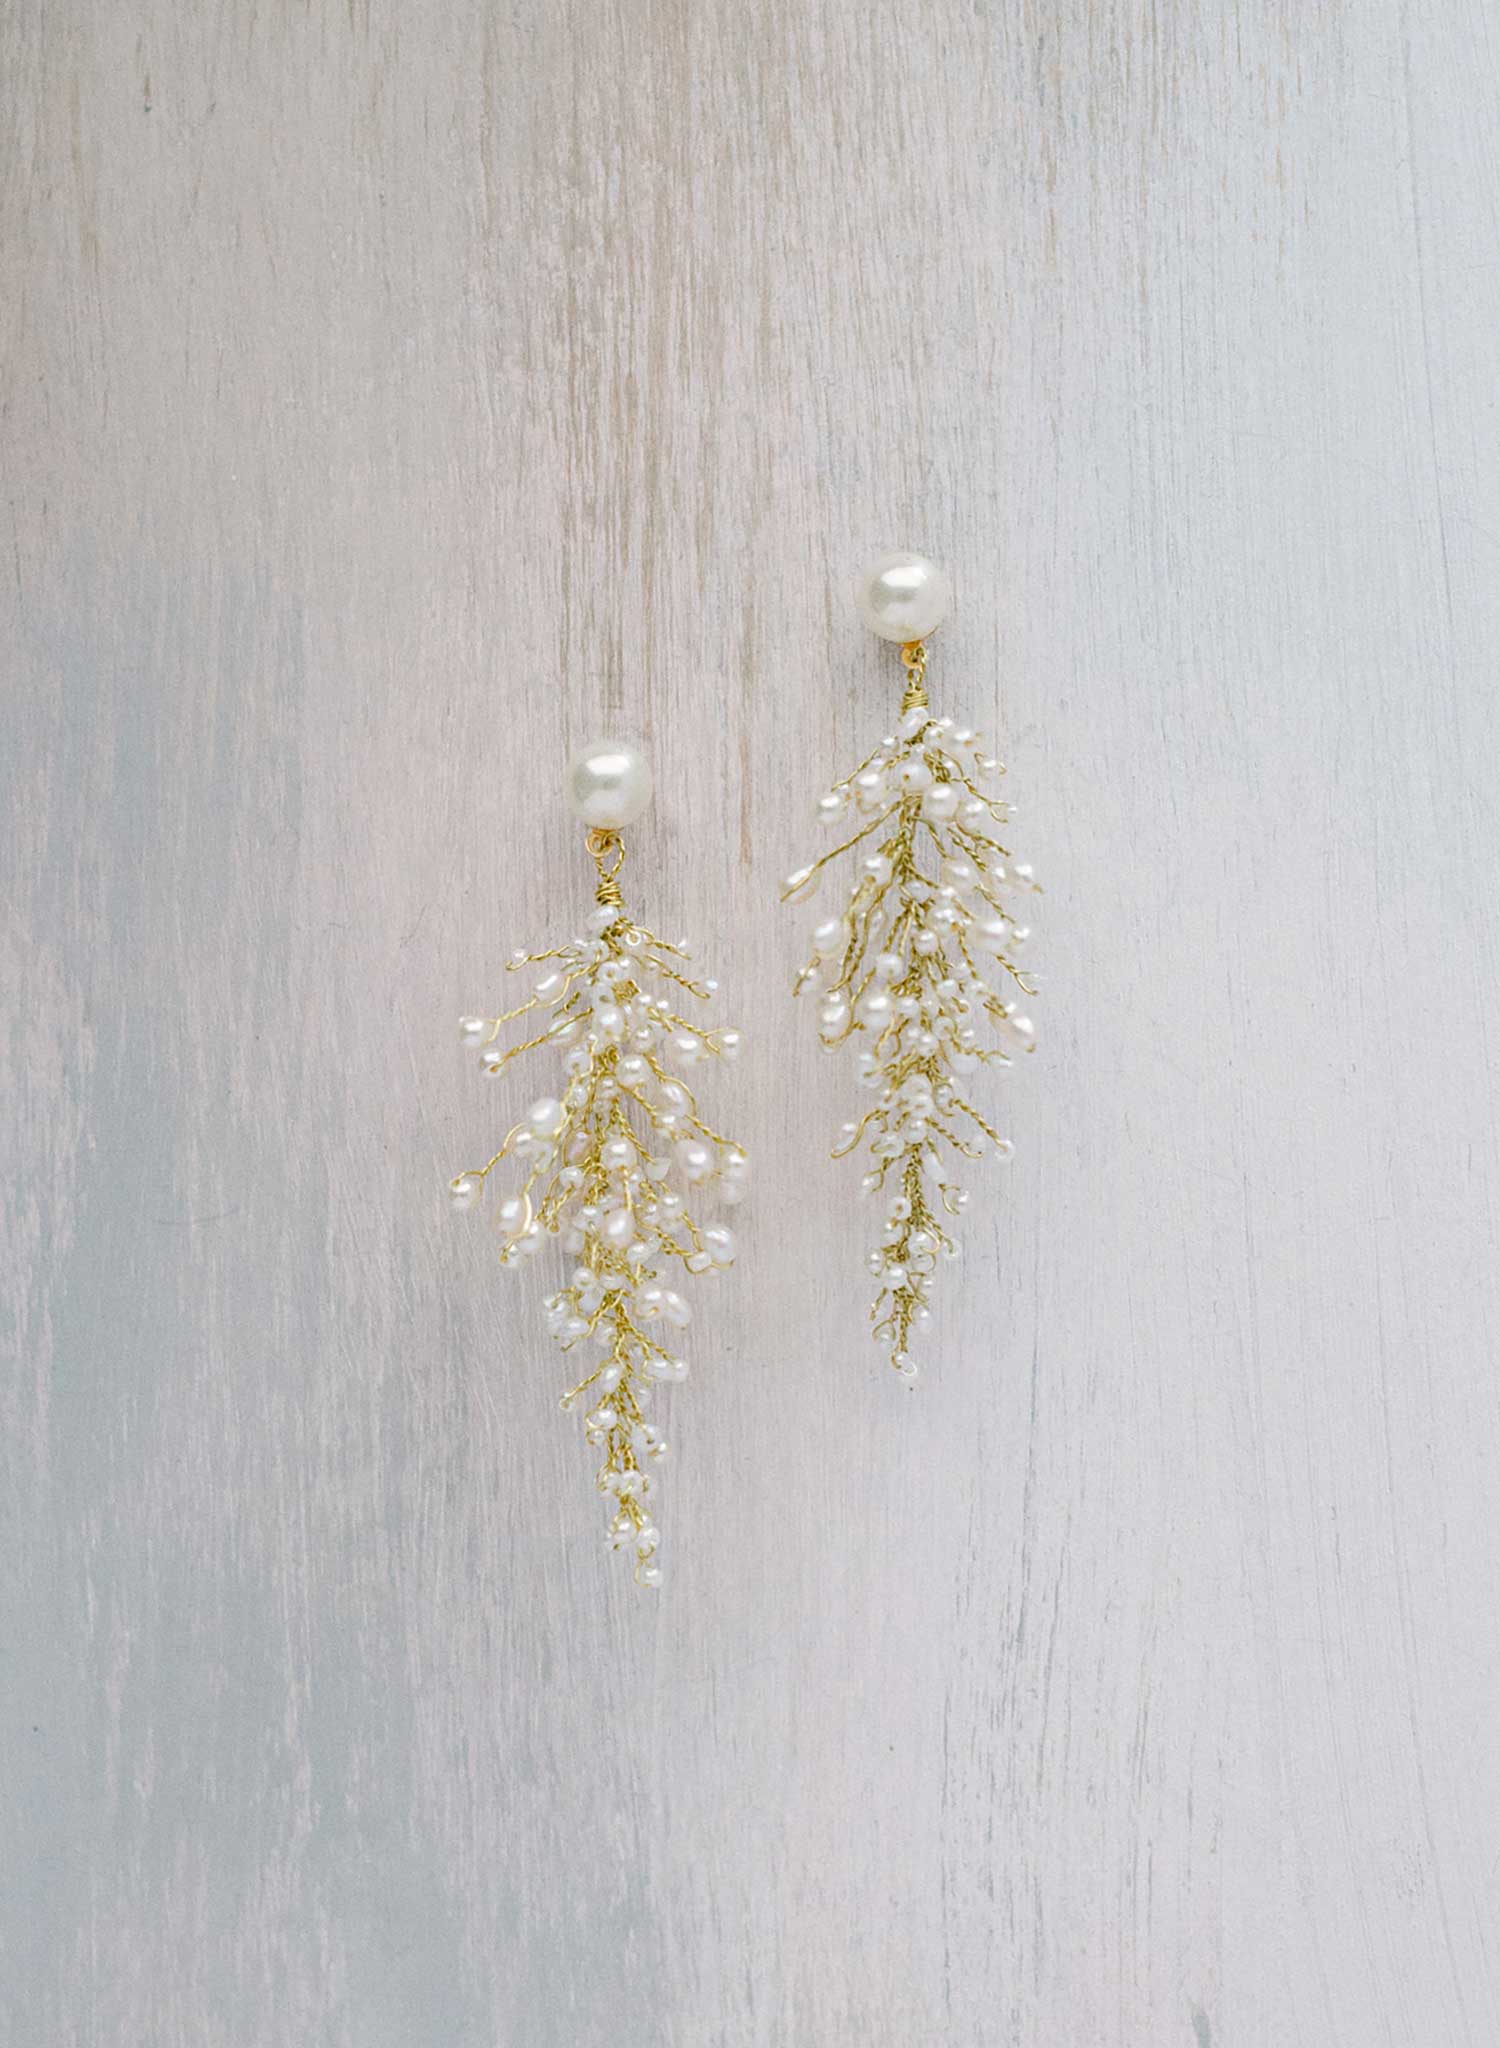 Pearl wisteria bridal earrings - Style #2429